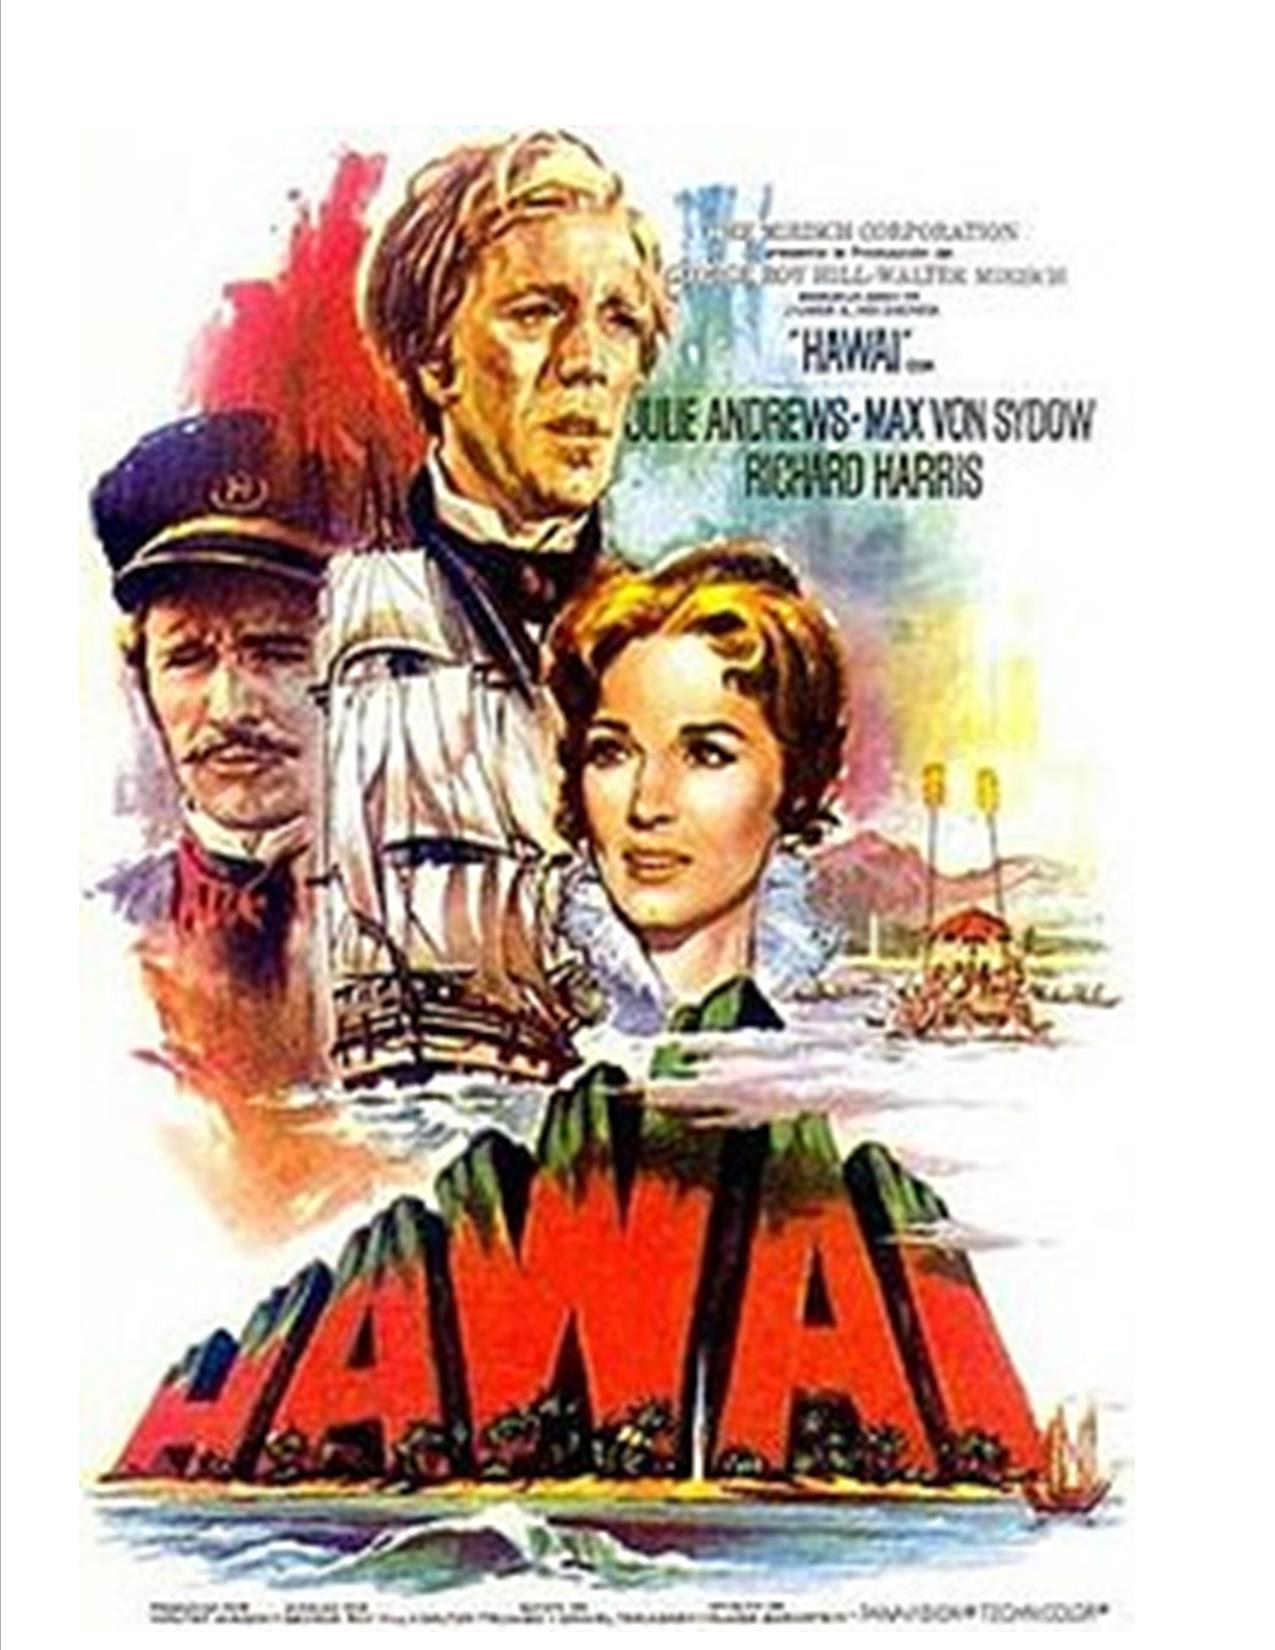 Hawaii film poster